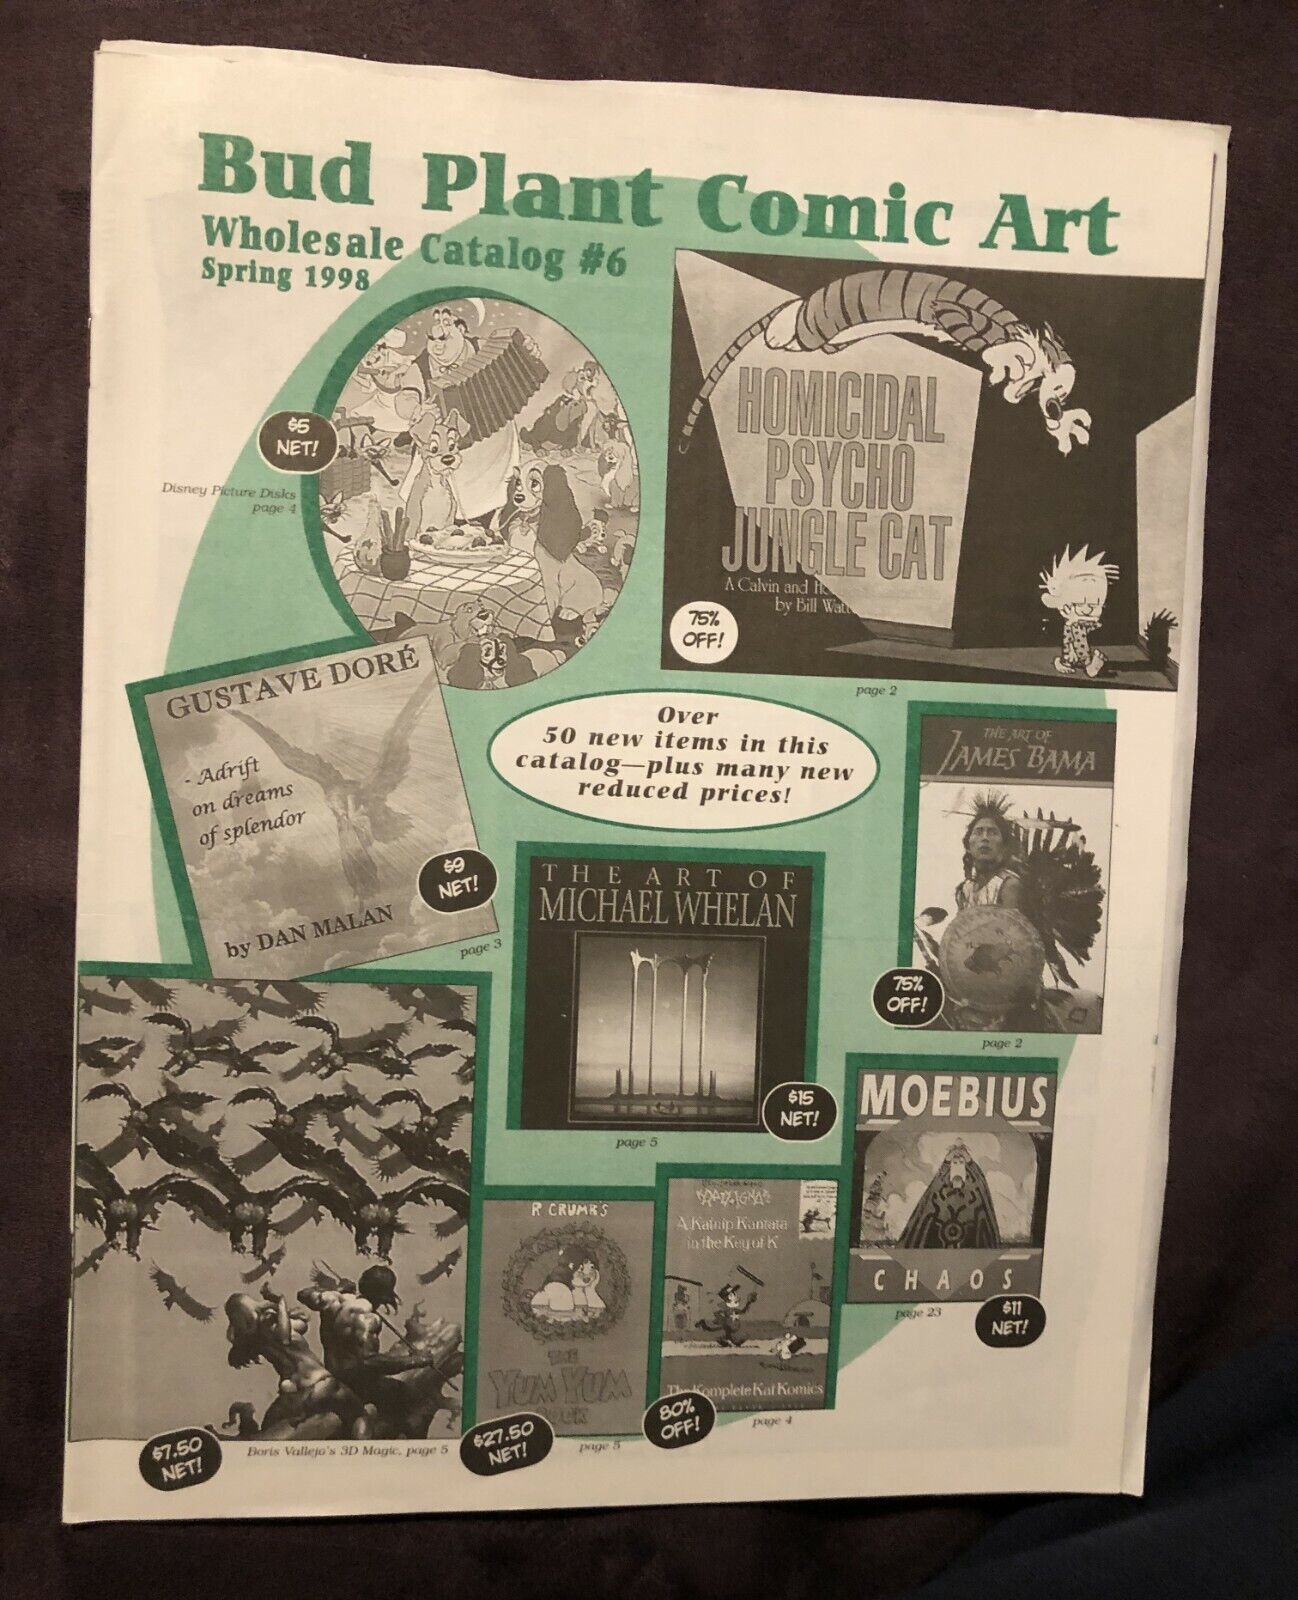 BUD PLANT\'S COMIC ART WHOLESALE CATALOG #6 Spring 1998